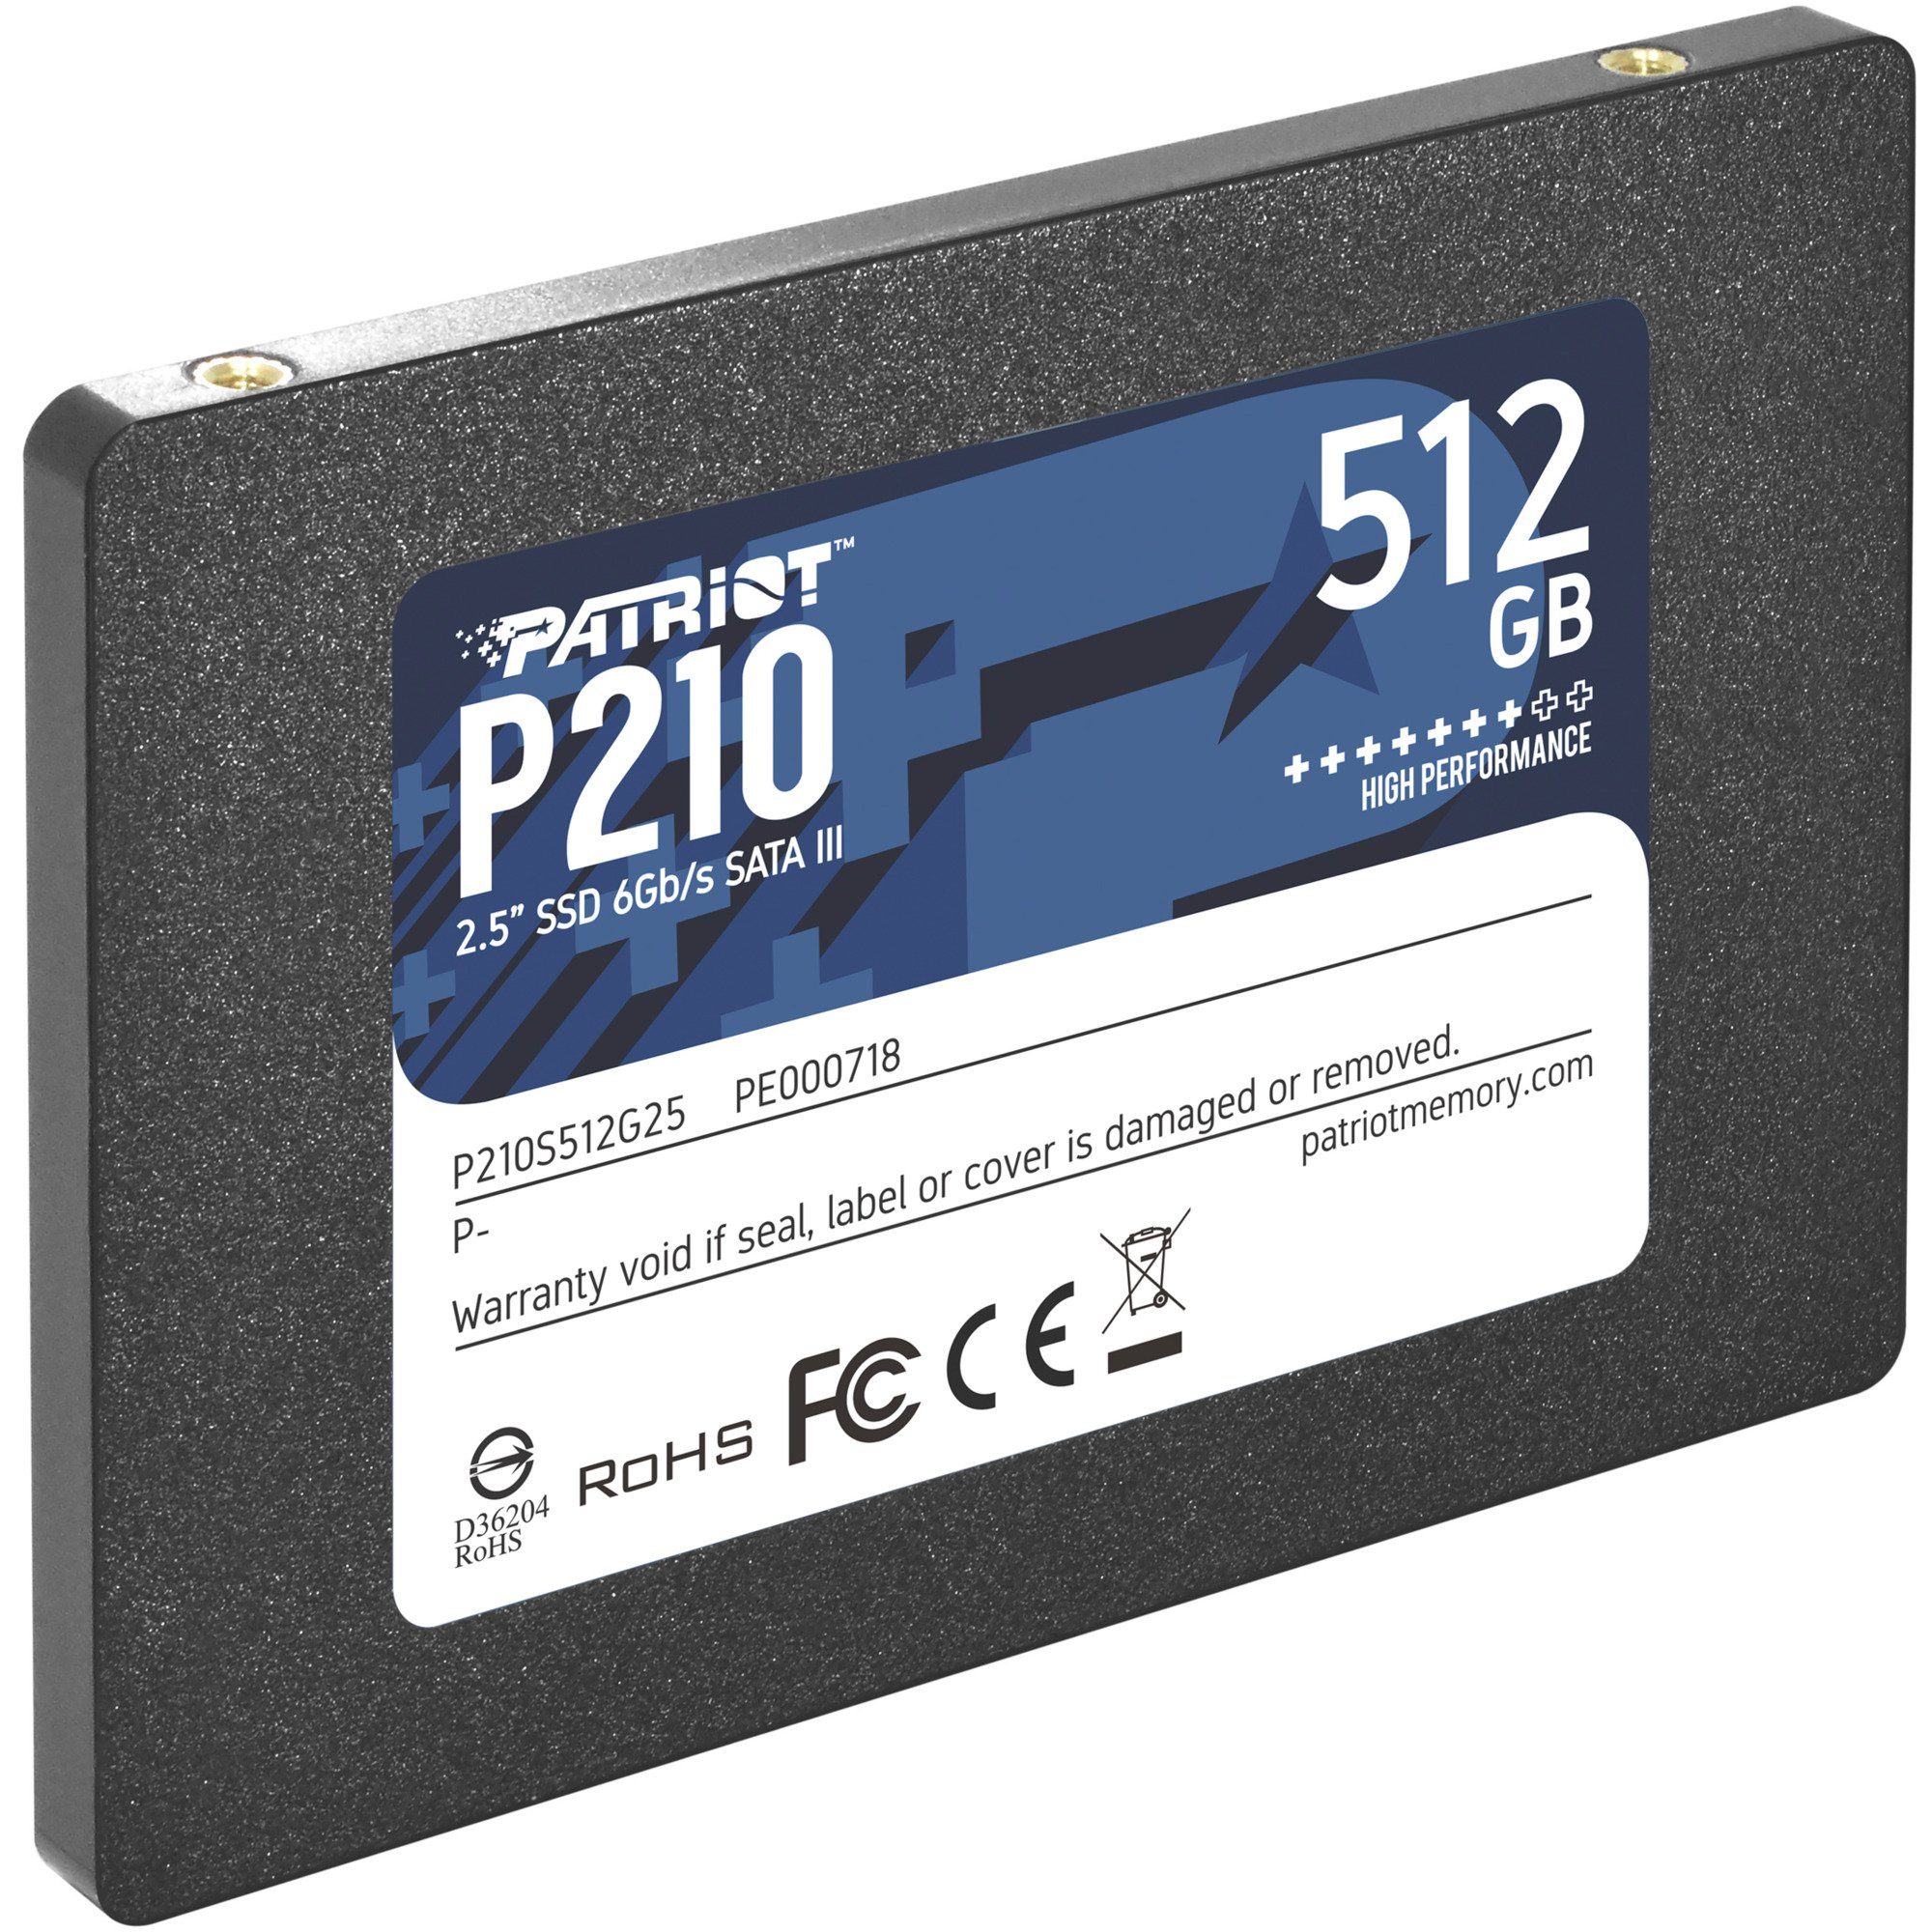 Patriot P210 512 GB, SATA 6 Gb/s, 2,5" SSD-Festplatte